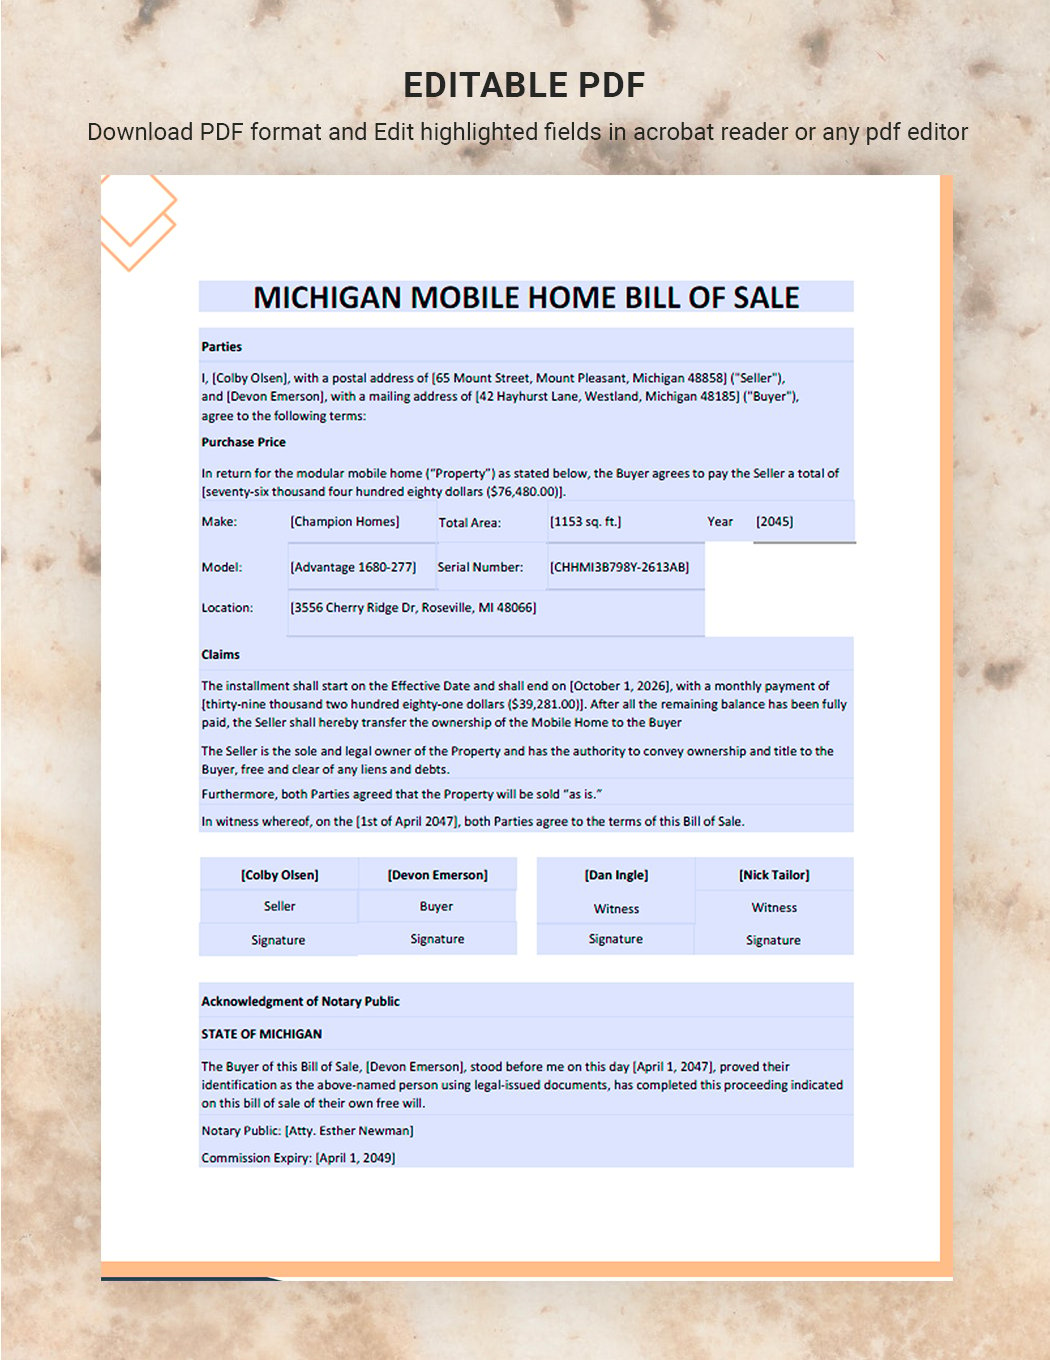 Michigan Mobile Home Bill of Sale Template